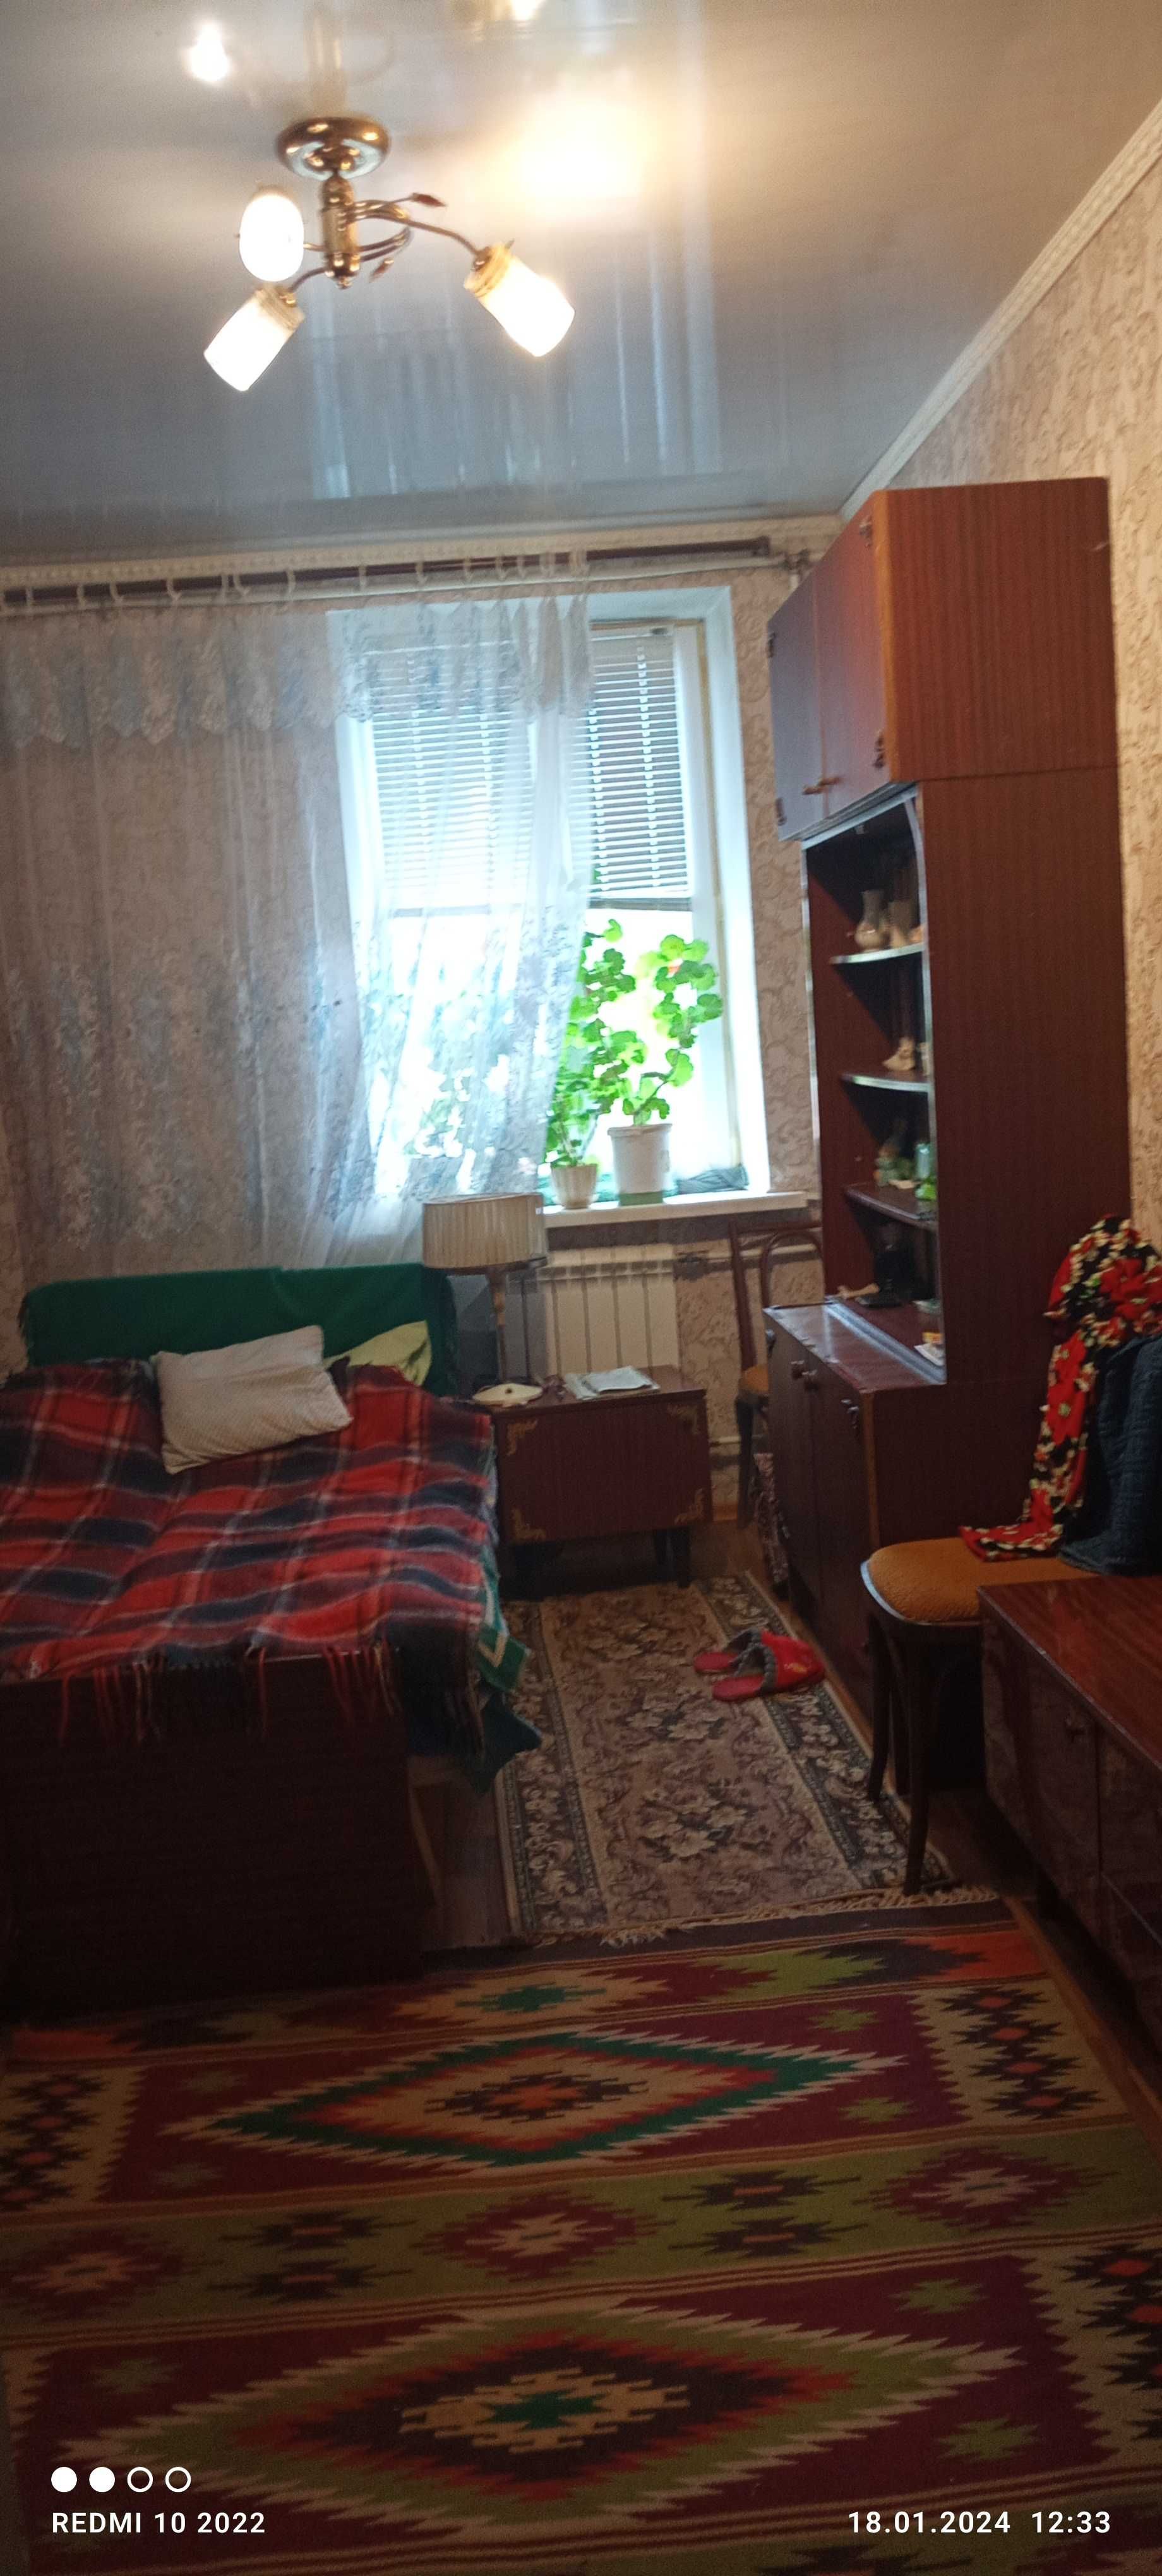 Квартира 2-х комнатная на Первомайке.